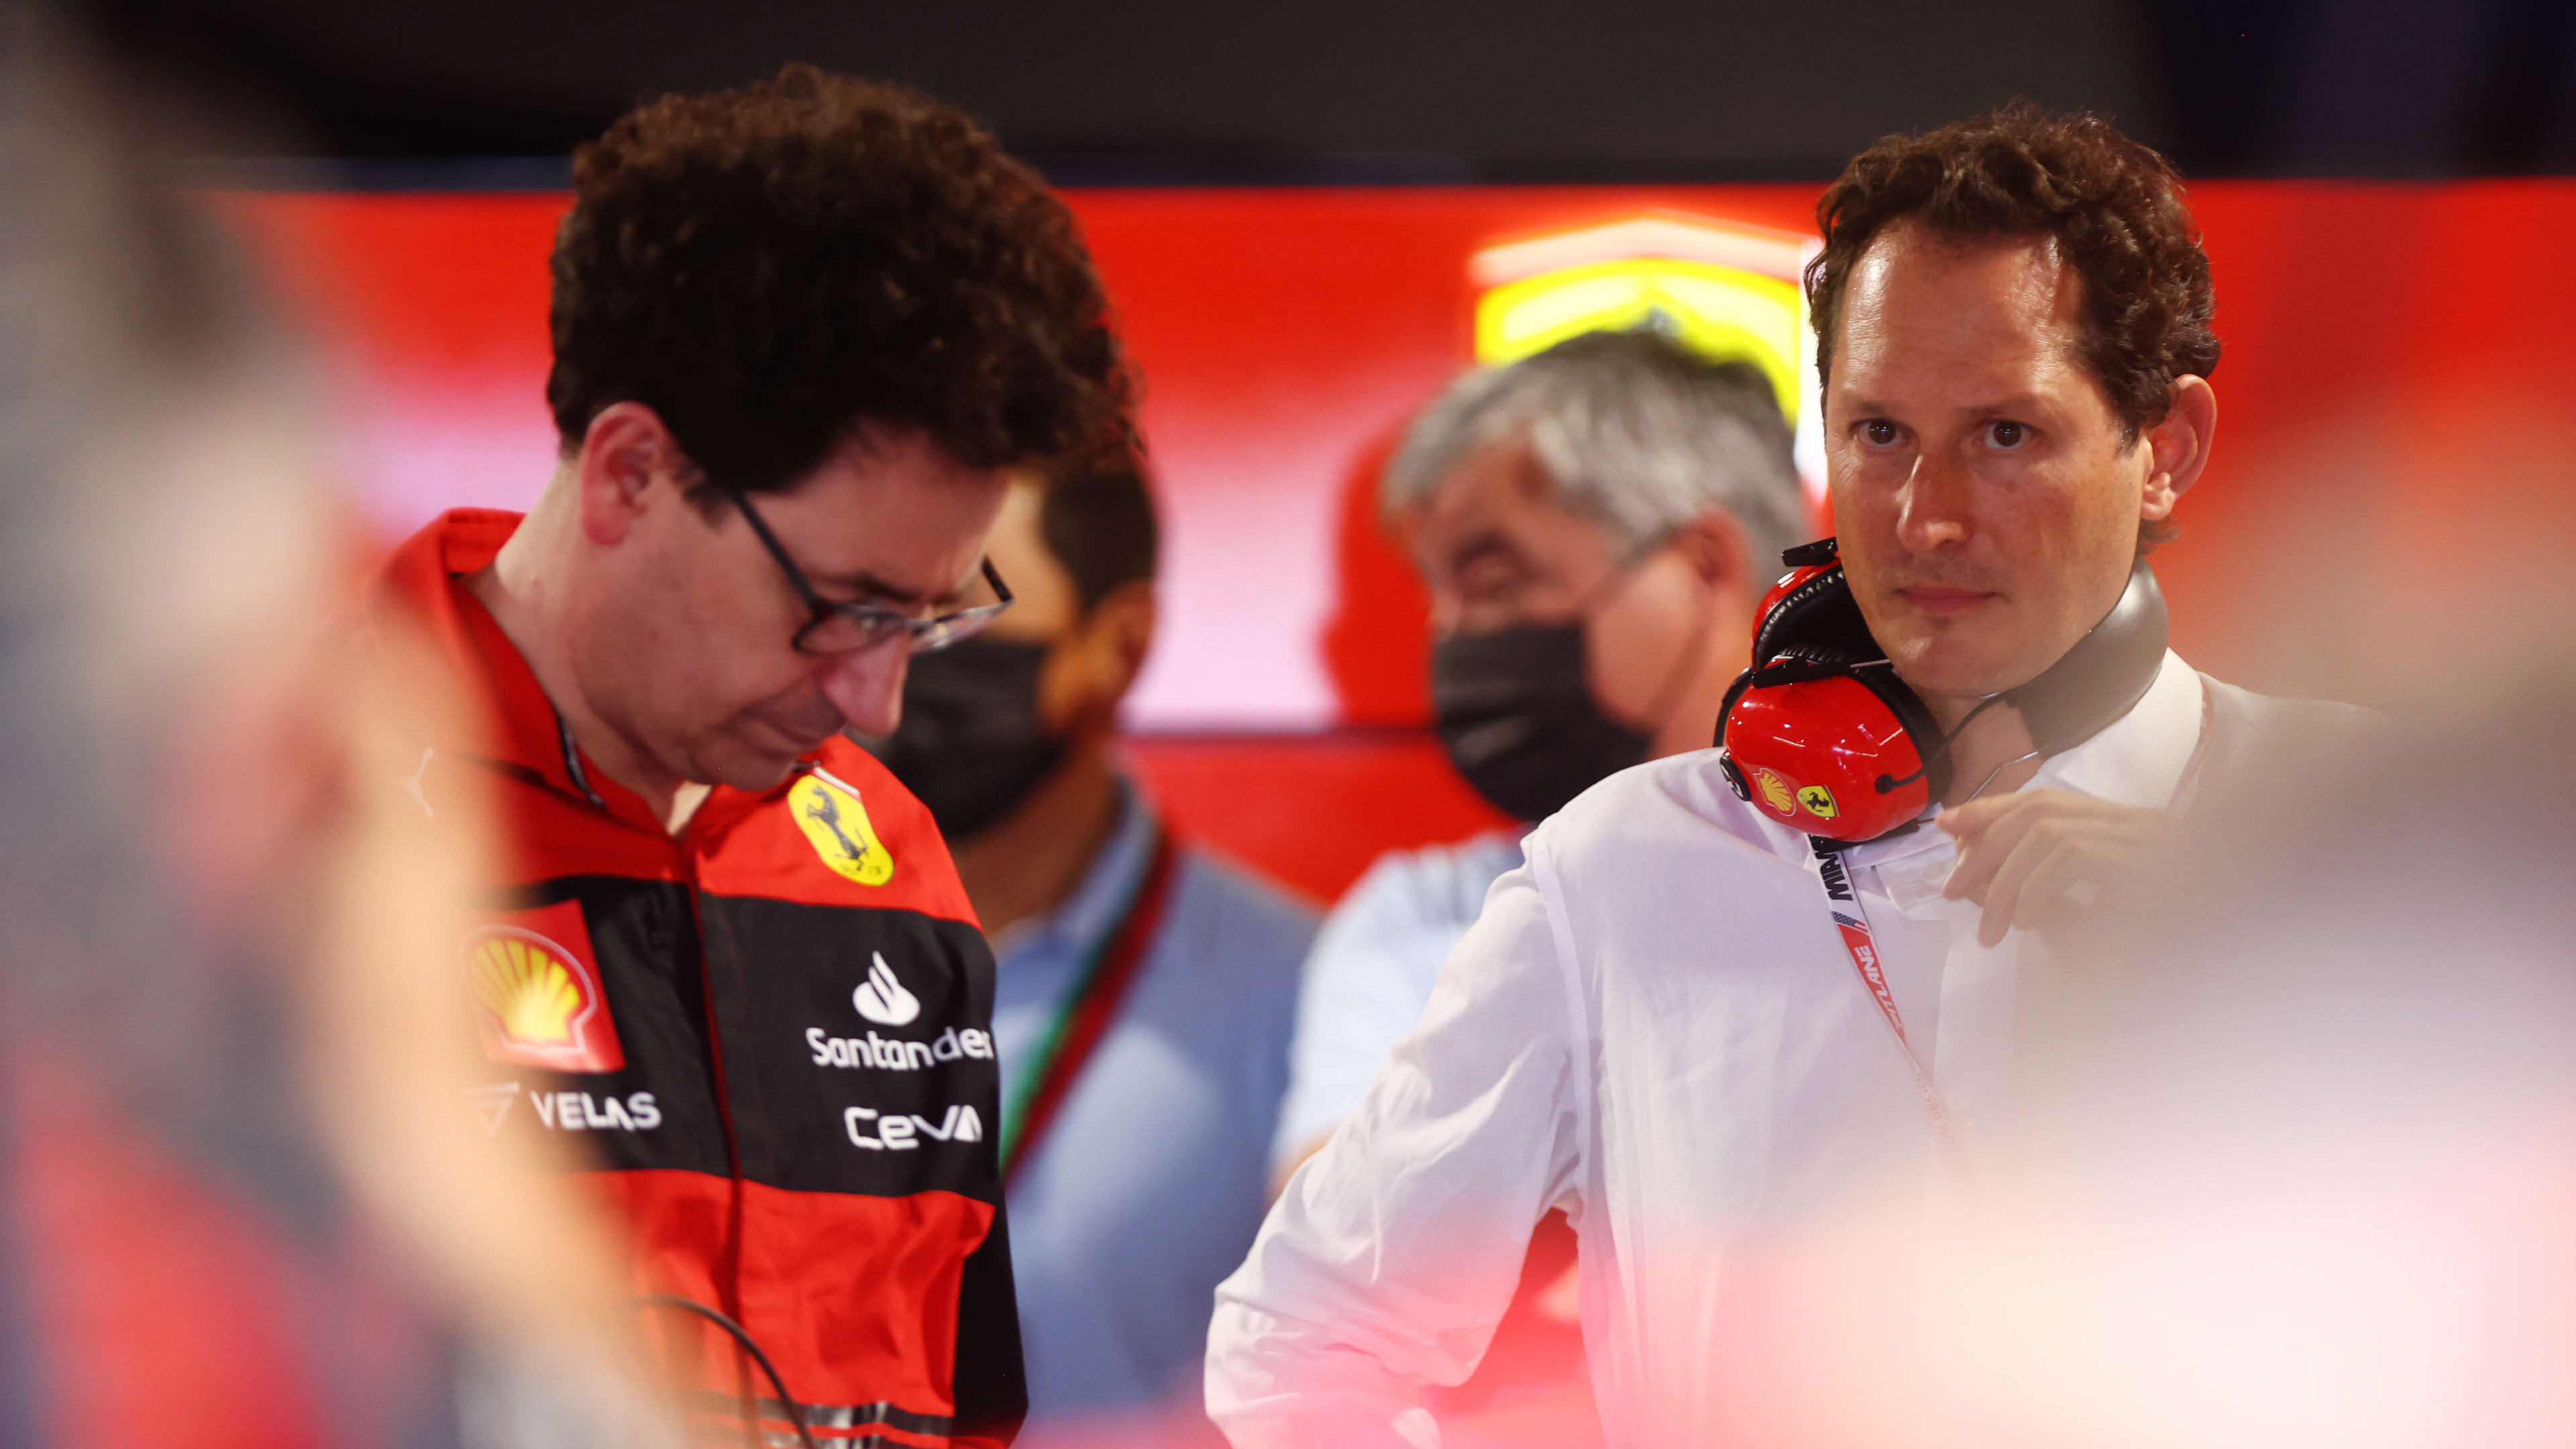 Binotto 'pretty relaxed' over 'speculation with no foundations' regarding  his Ferrari future | Formula 1®